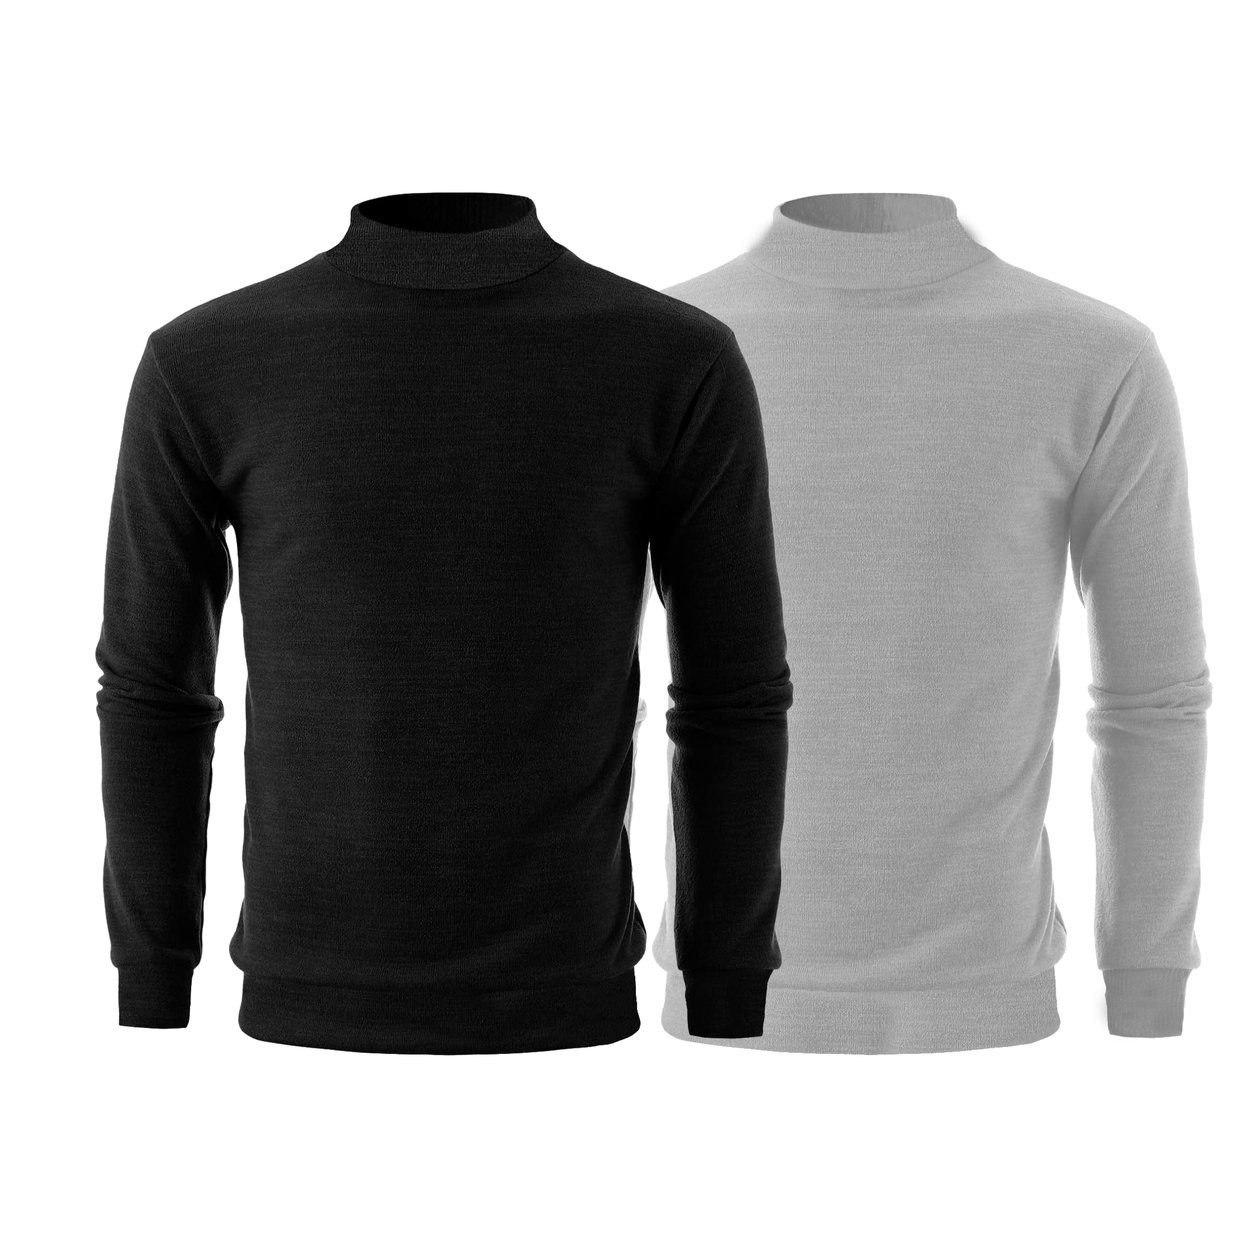 2-Pack: Men's Winter Warm Cozy Knit Slim Fit Mock Neck Sweater - Black & Navy, Small